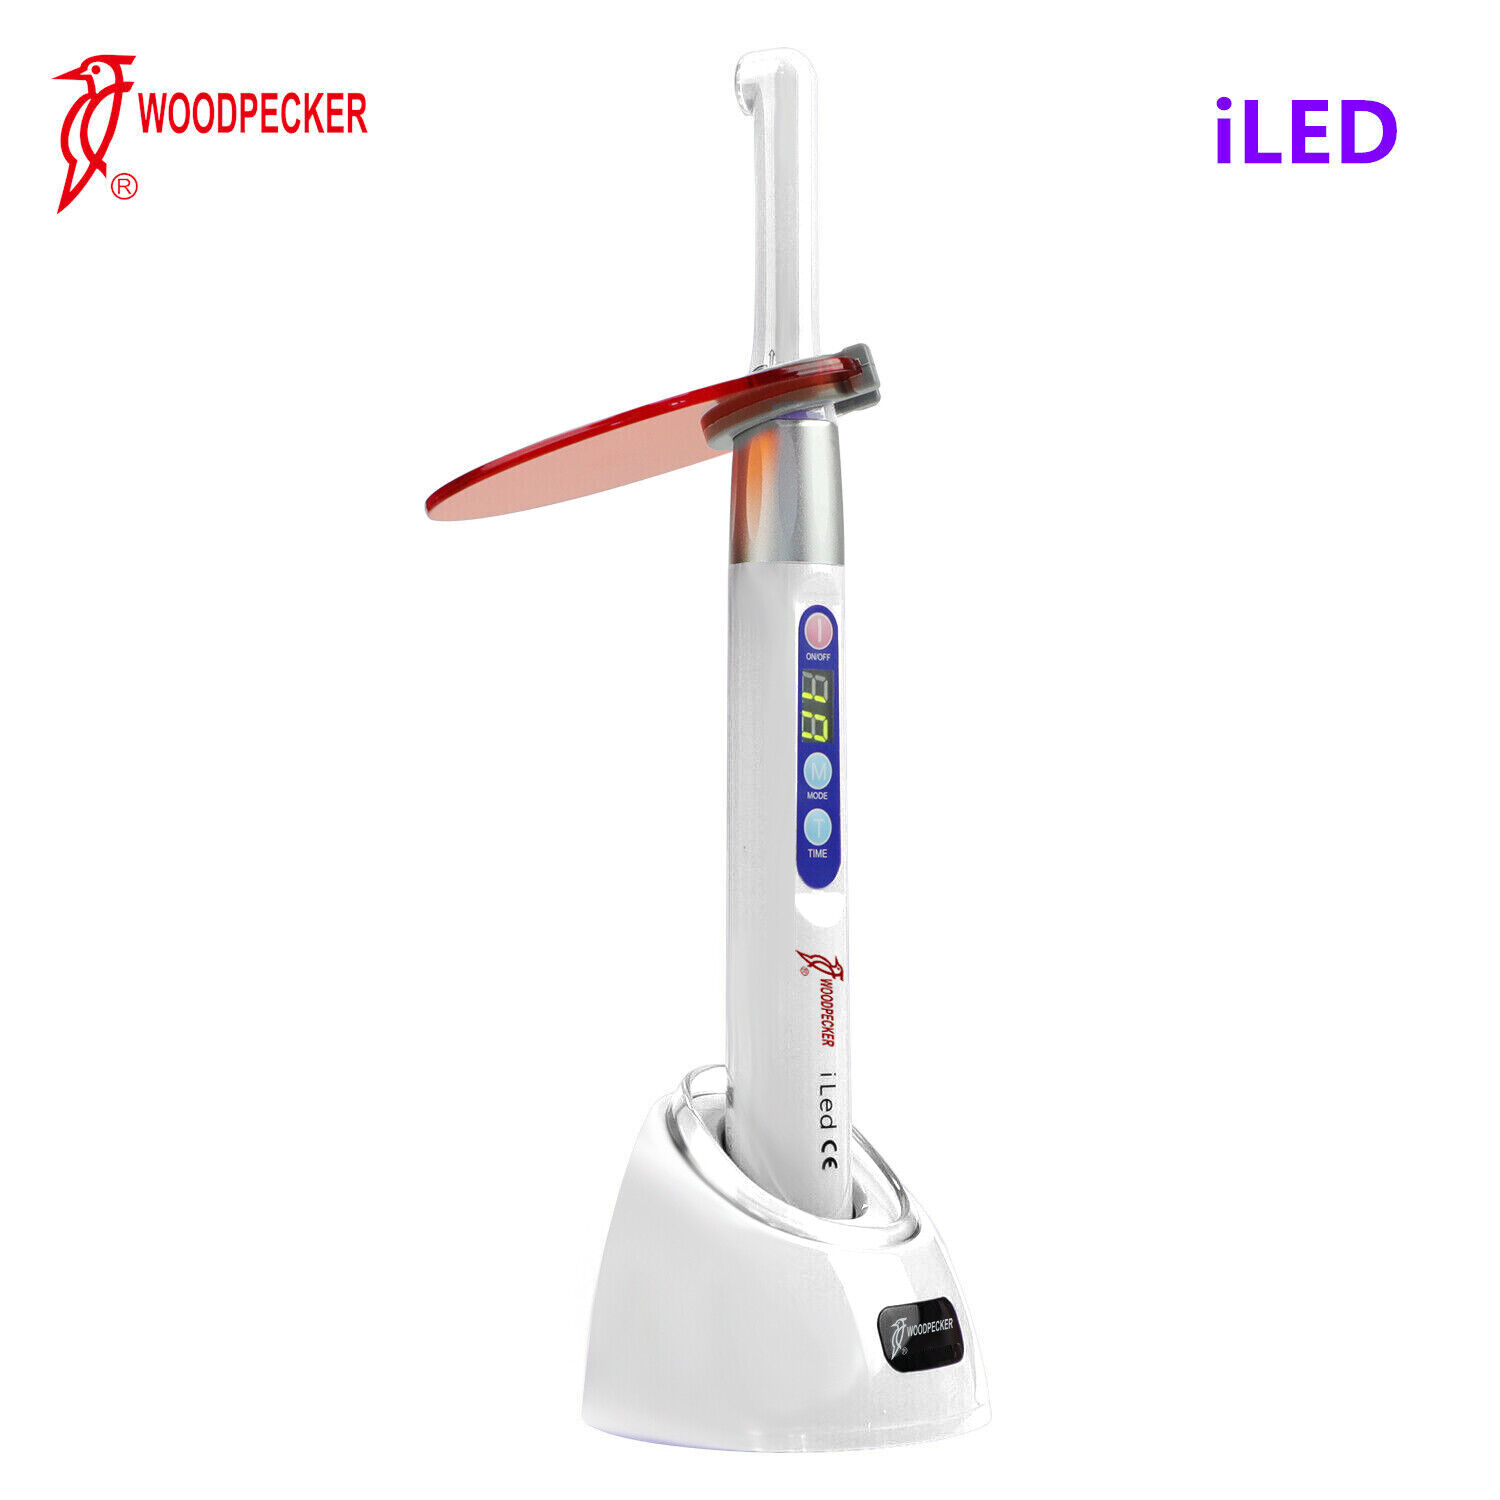 100% Genuine Woodpecker iLED Dental Curing Light Lamp 1 Sec Resin Cure 2600mw/c㎡